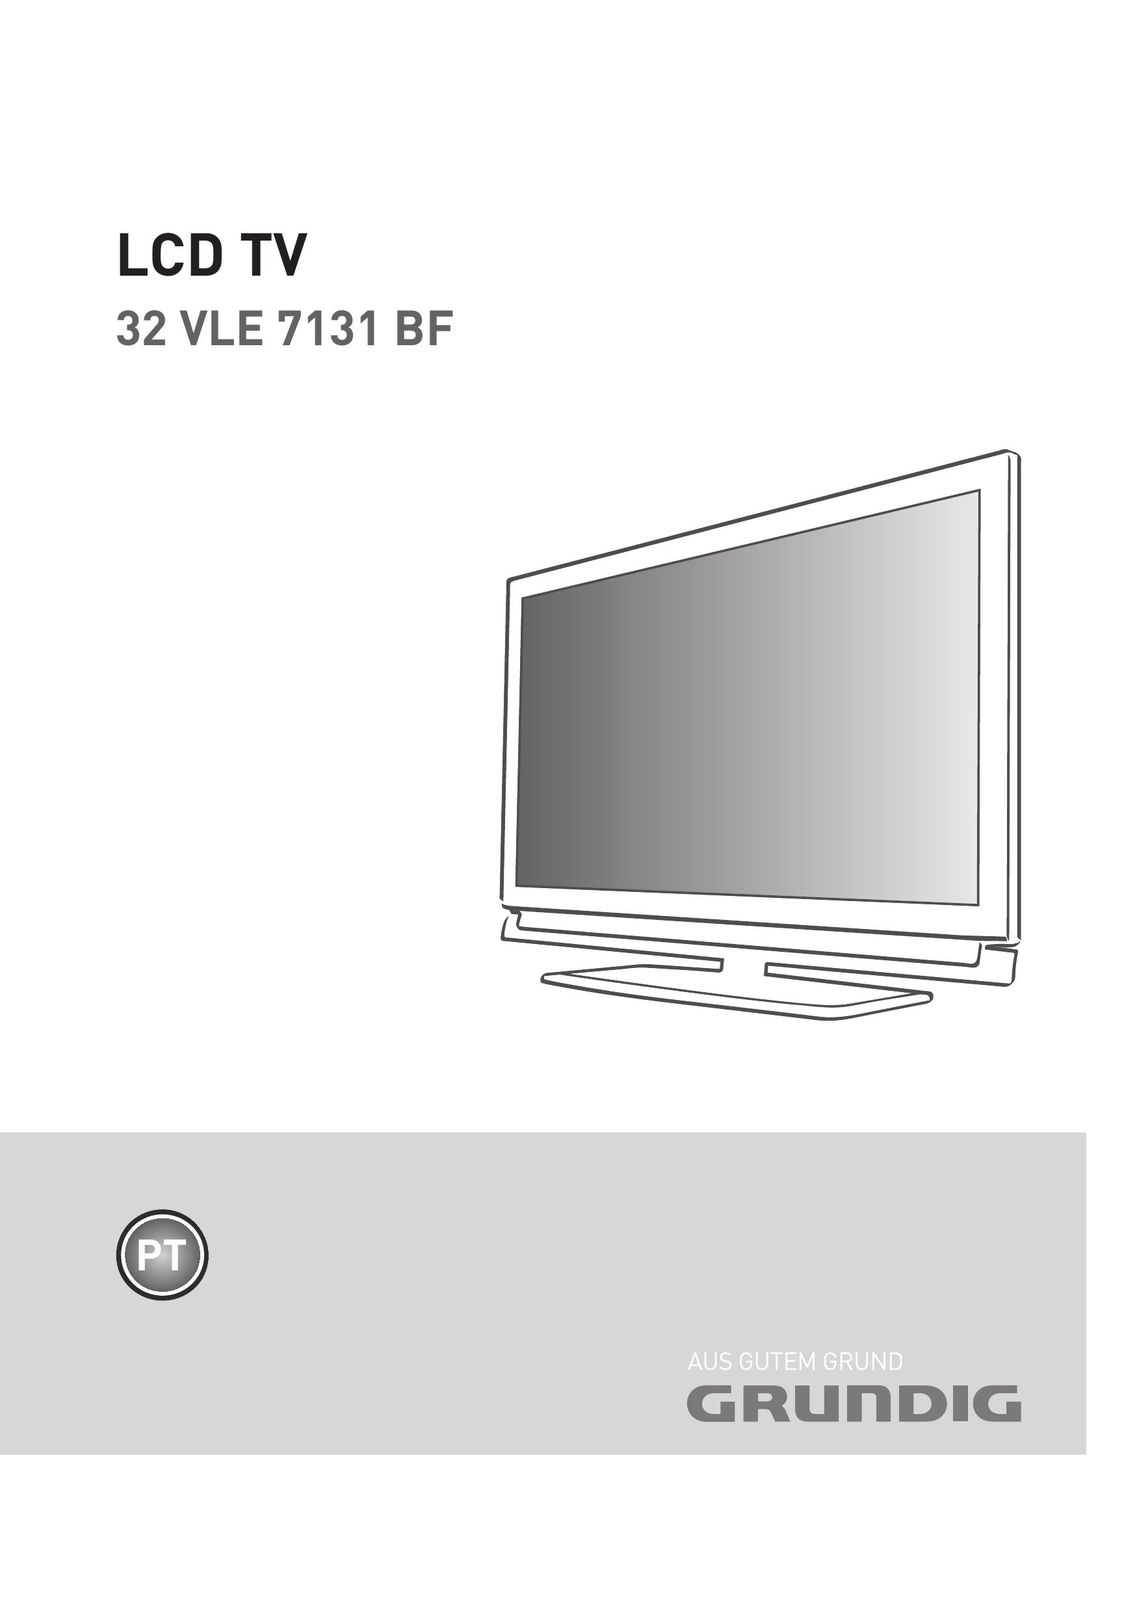 Grundig 32 VLE 7131 BF Flat Panel Television User Manual